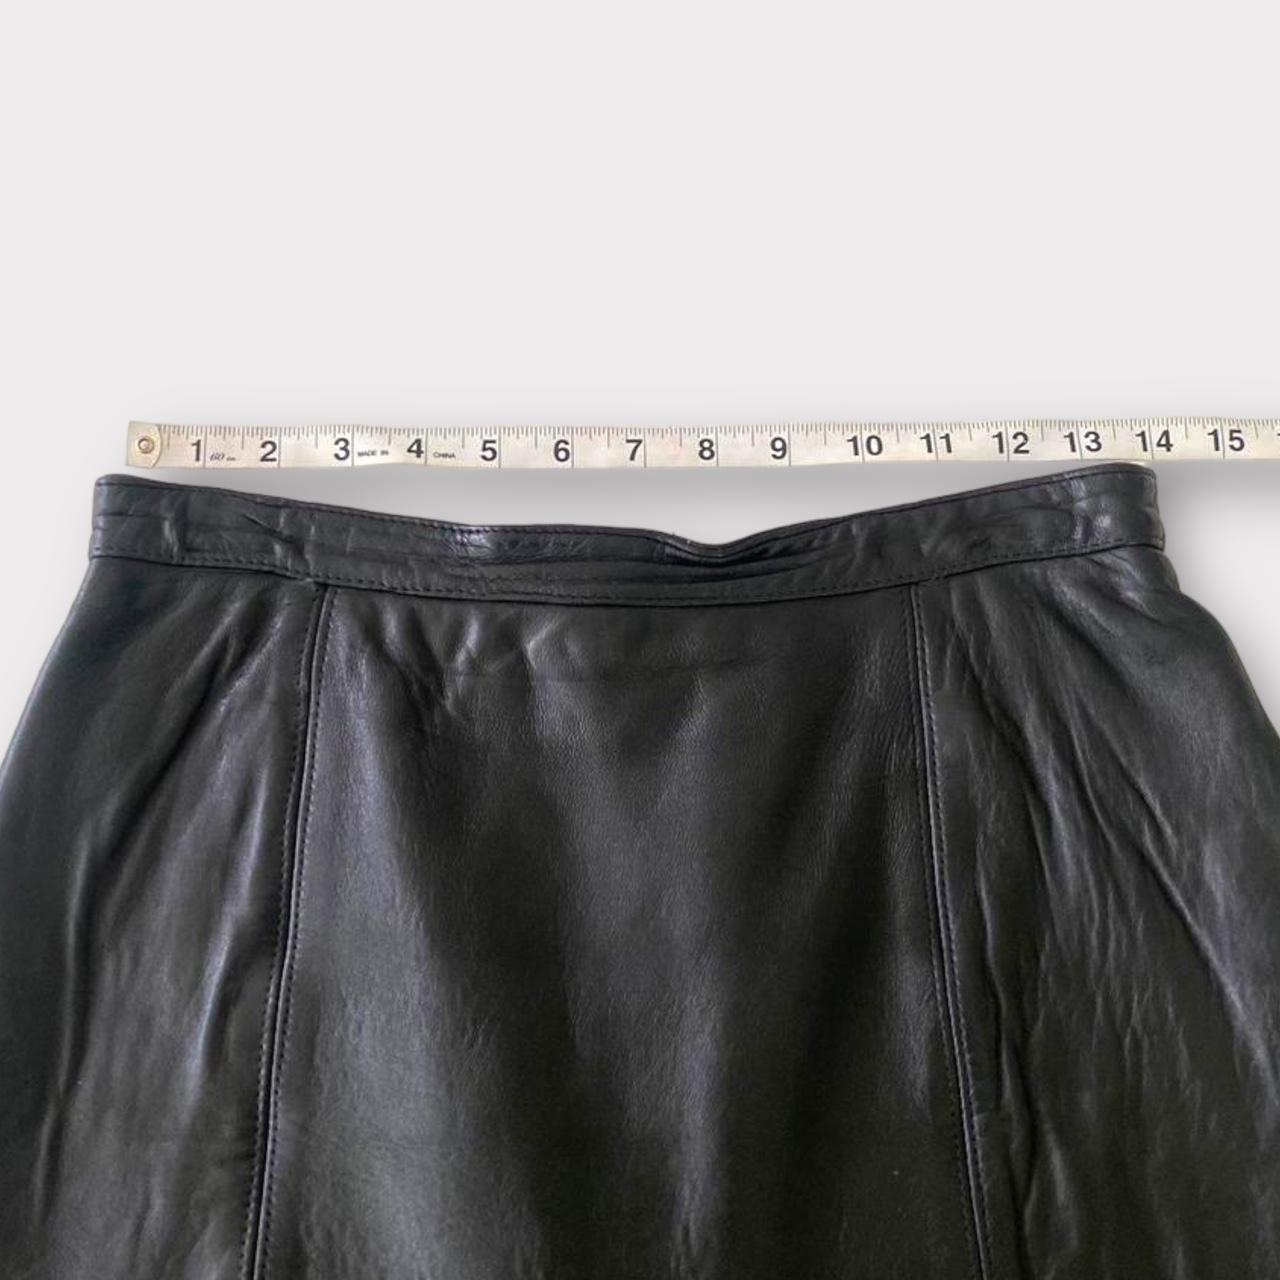 Vintage Black leather mini skirt Size 10 Approx... - Depop